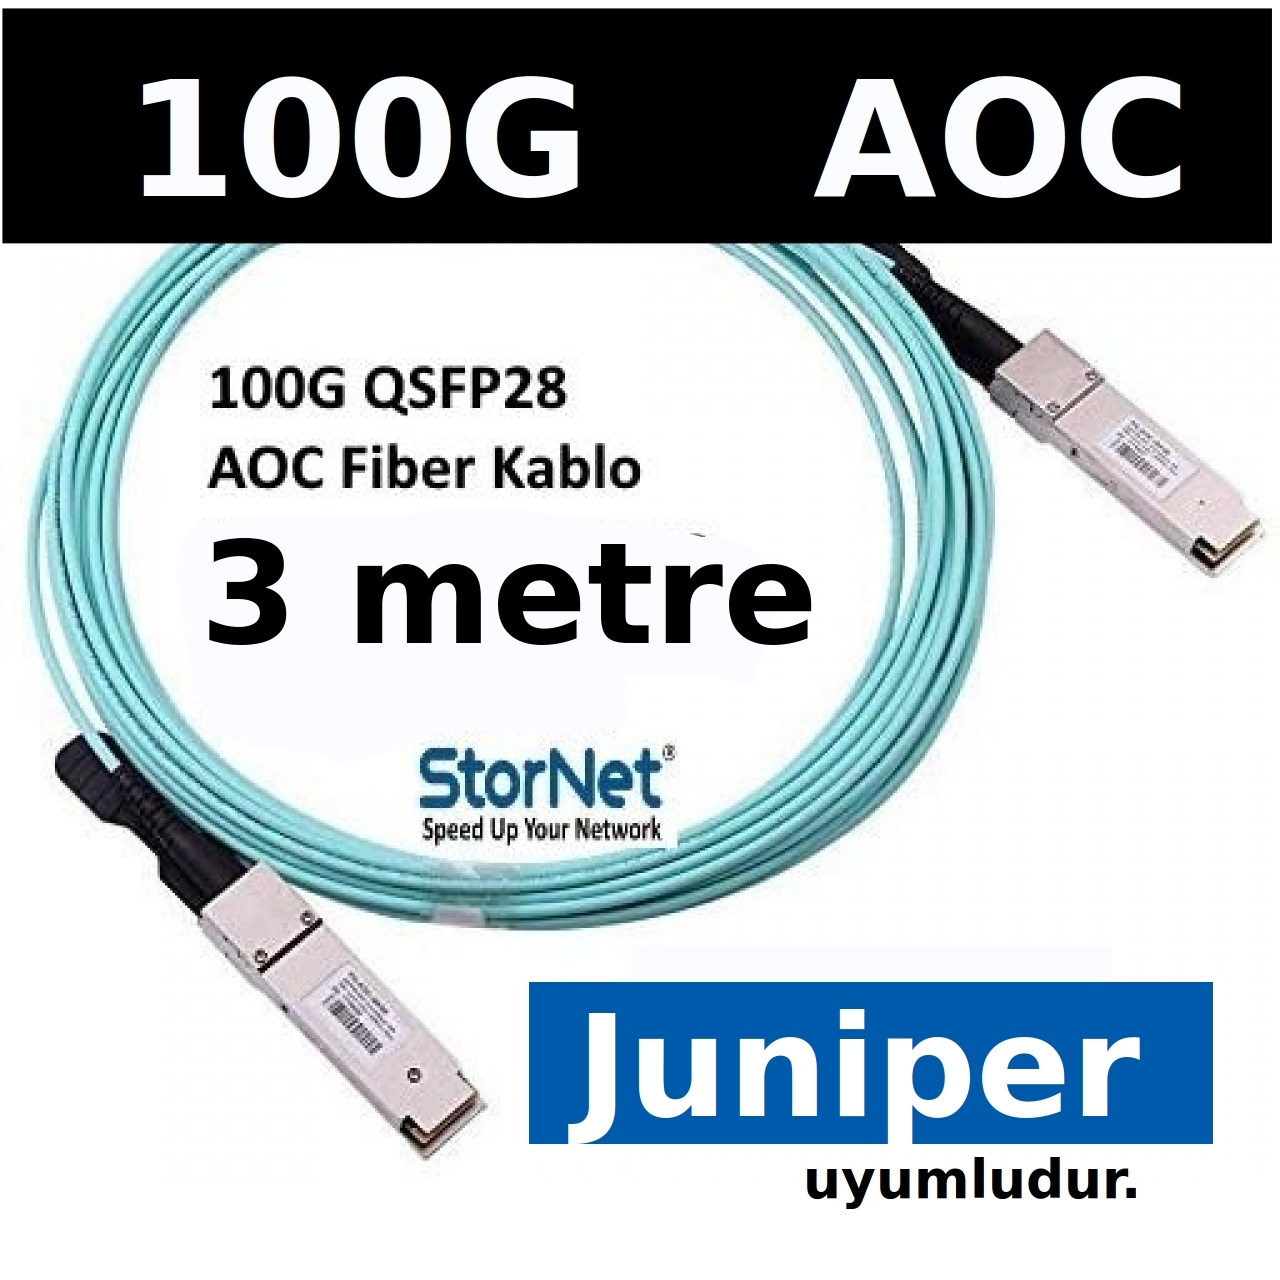 Juniper JNP-100G-AOC-3M uyumlu 3 metre 100G QSFP Active Optical Cable Kablo